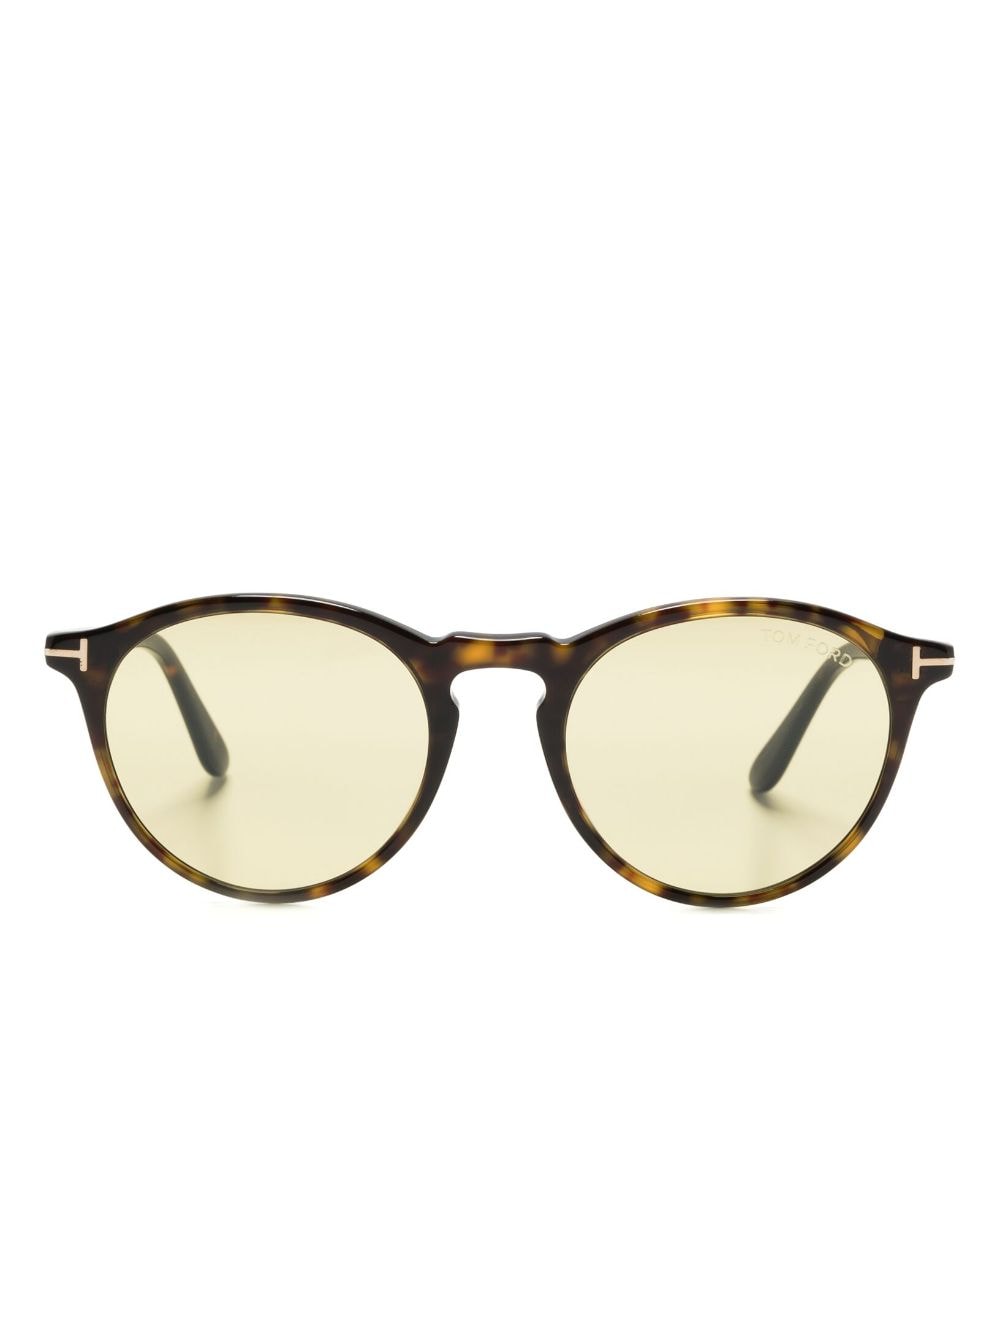 TOM FORD Eyewear Arele tortoiseshell pantos-frame sunglasses - Brown von TOM FORD Eyewear